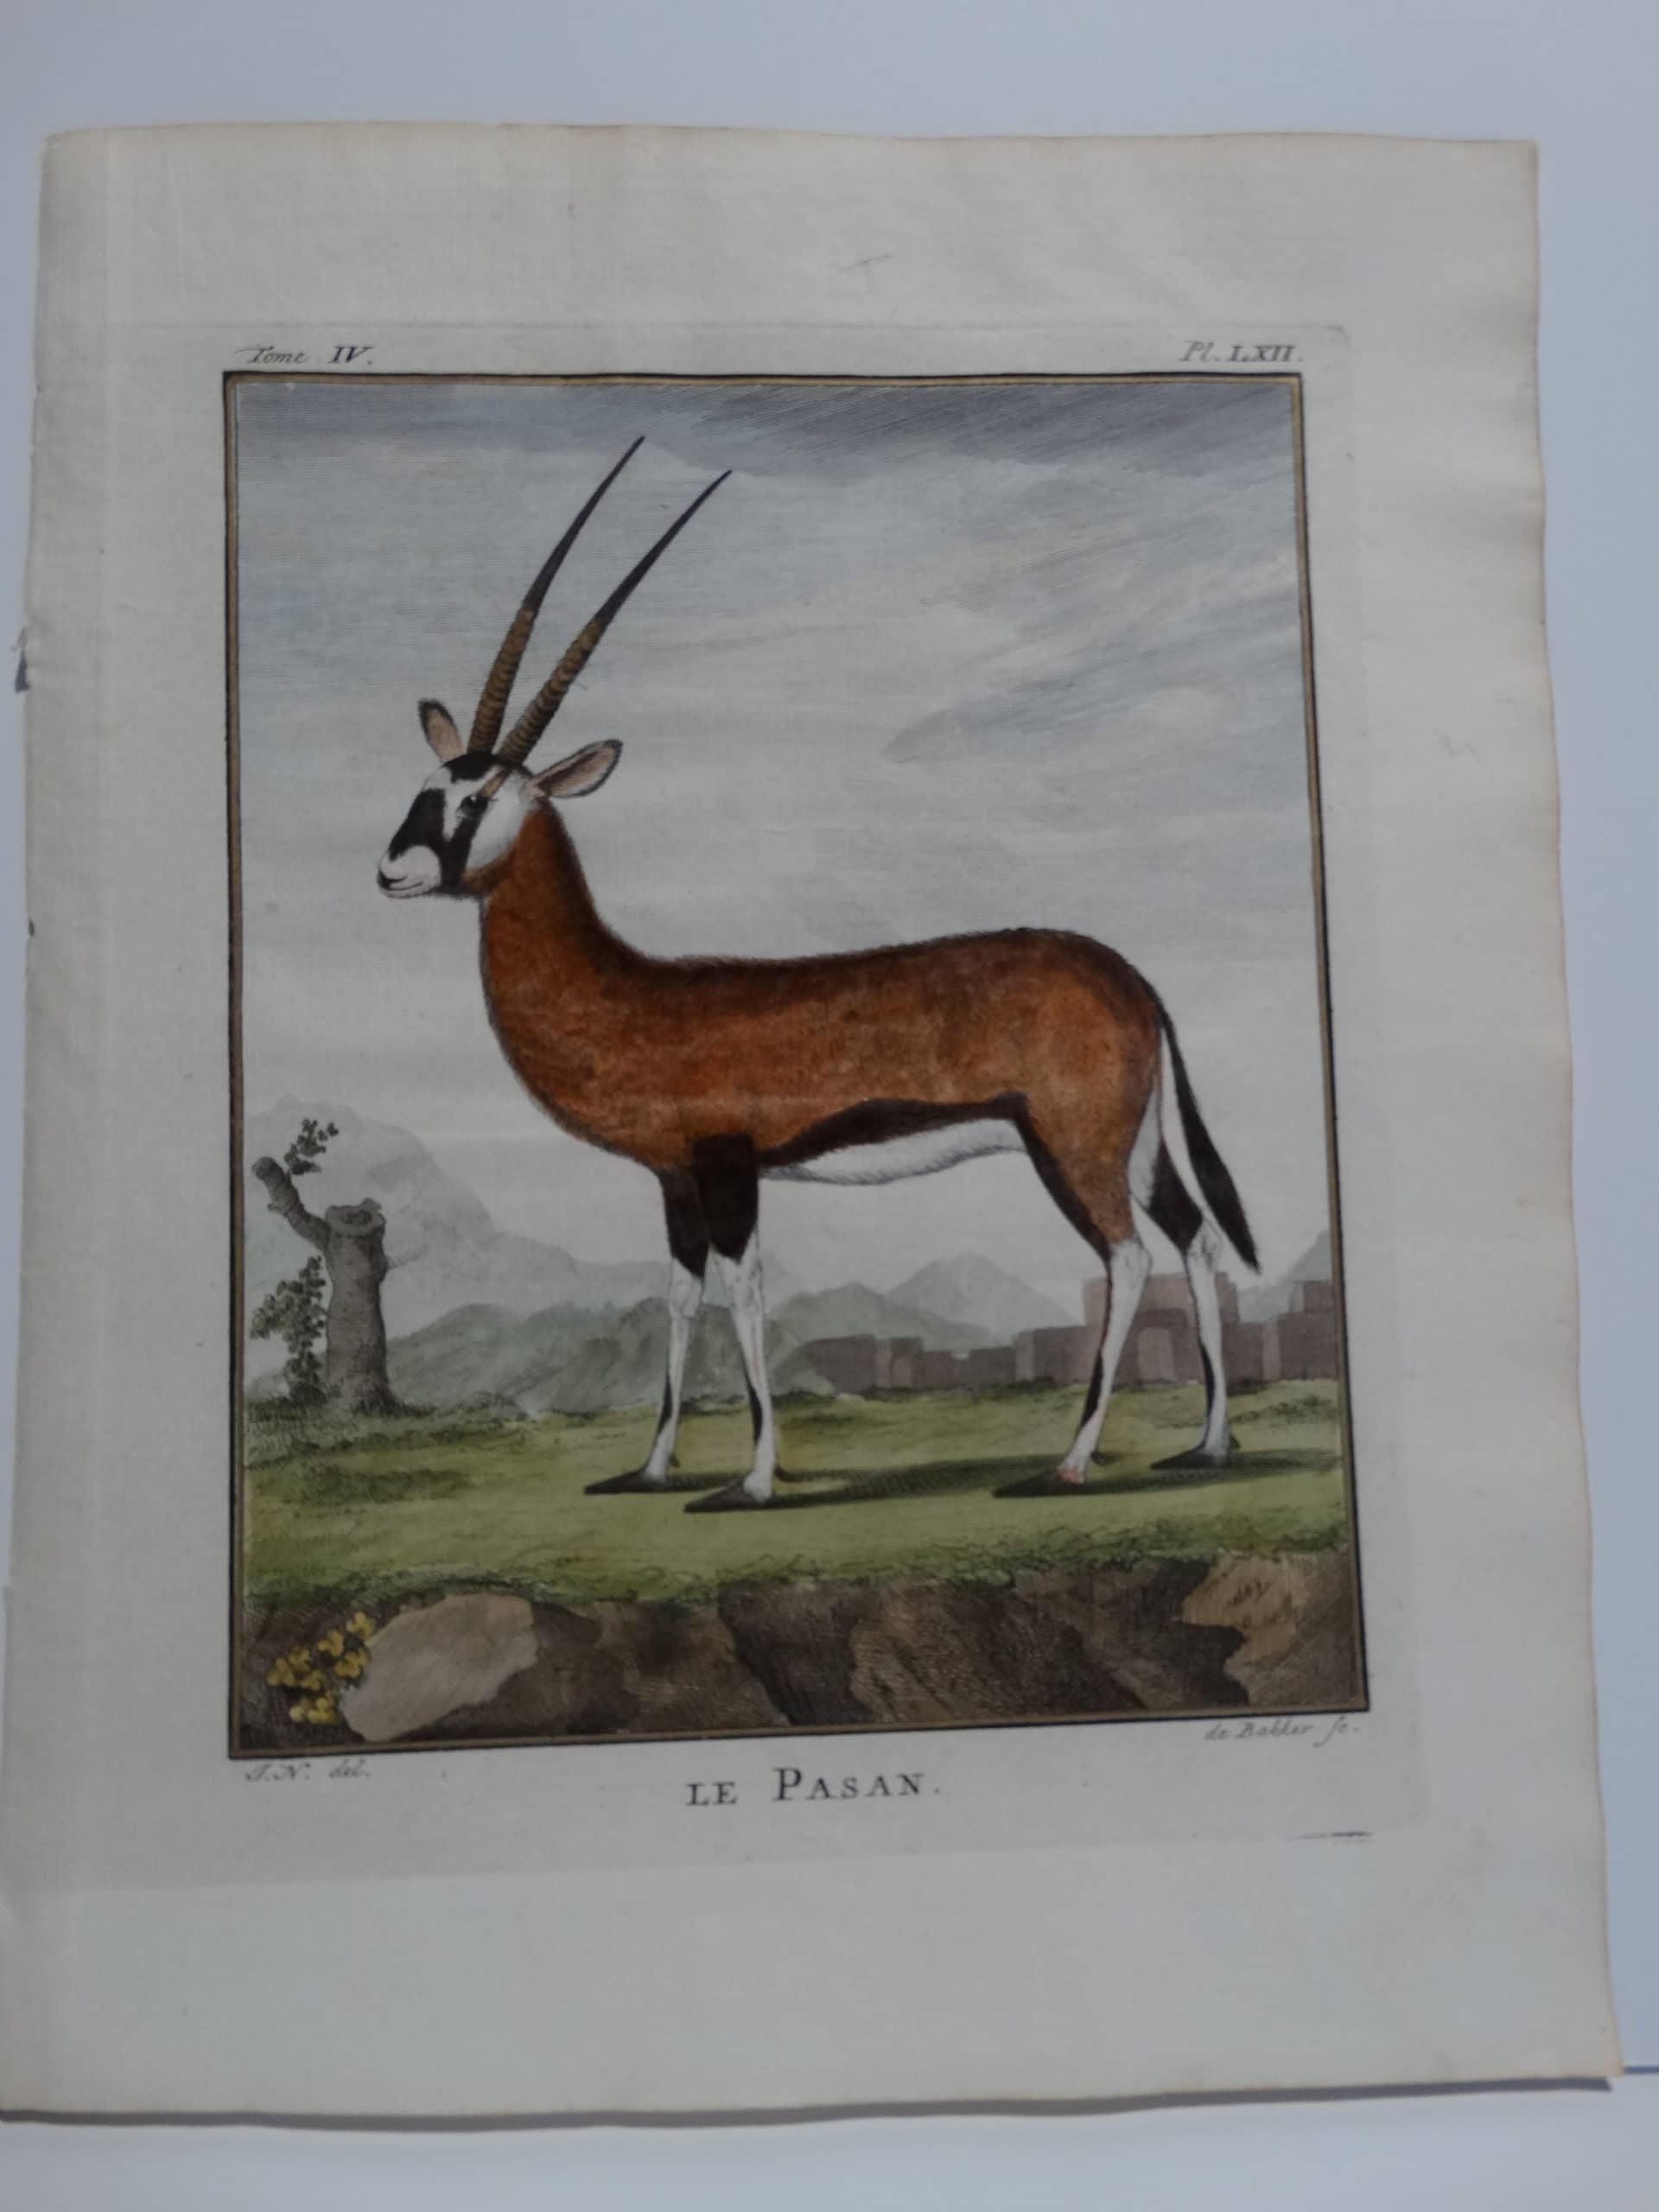 Beautiful 170 plus year old engraving of African gazelle, le Pasan.